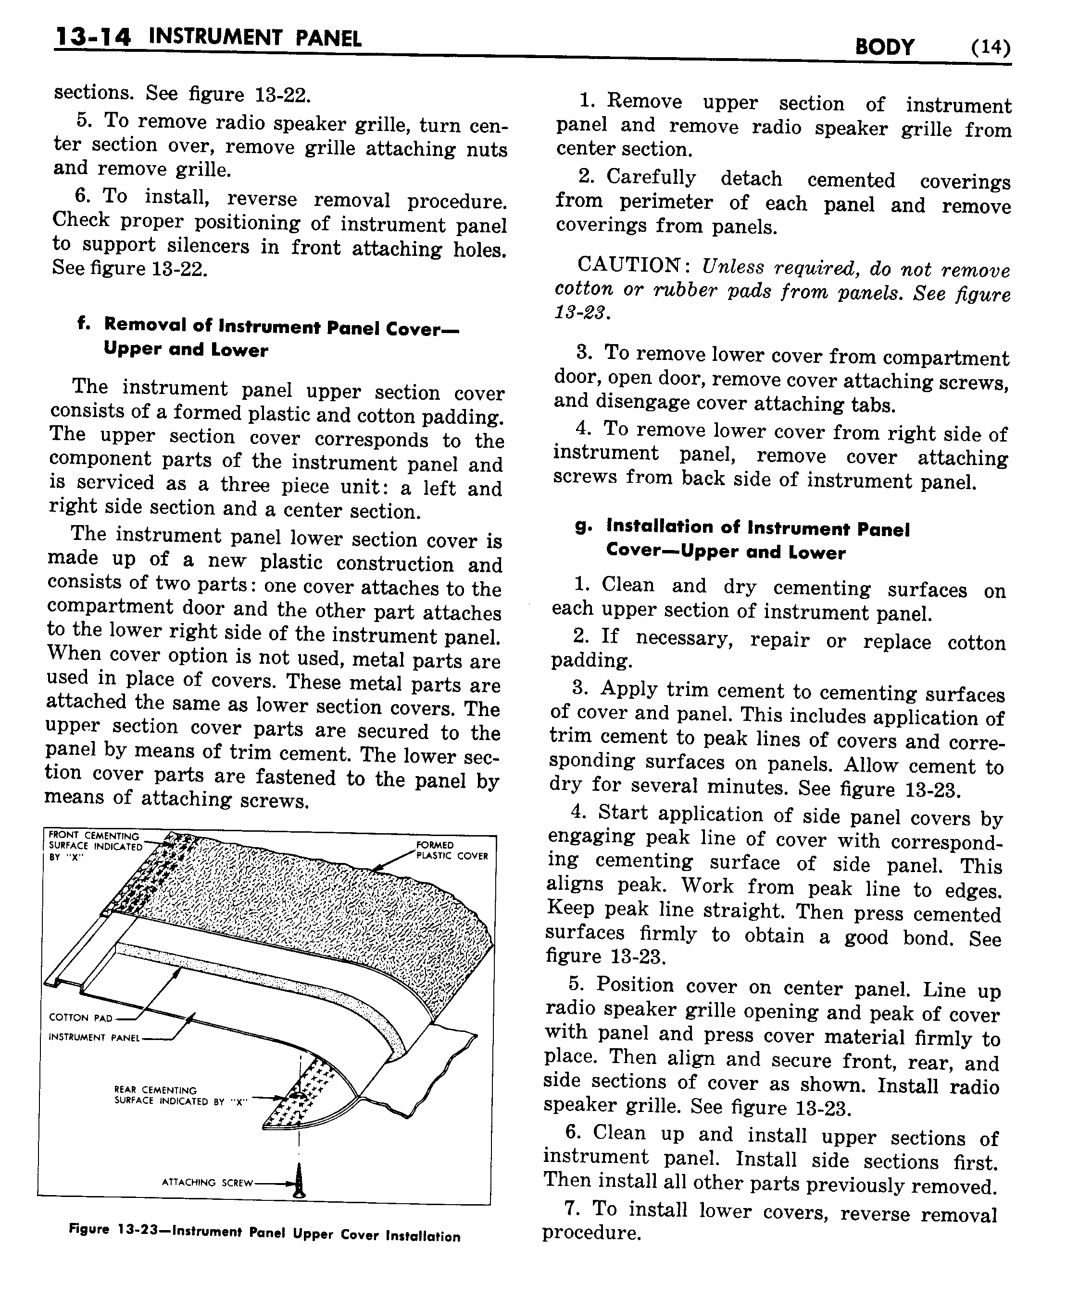 n_1957 Buick Body Service Manual-016-016.jpg